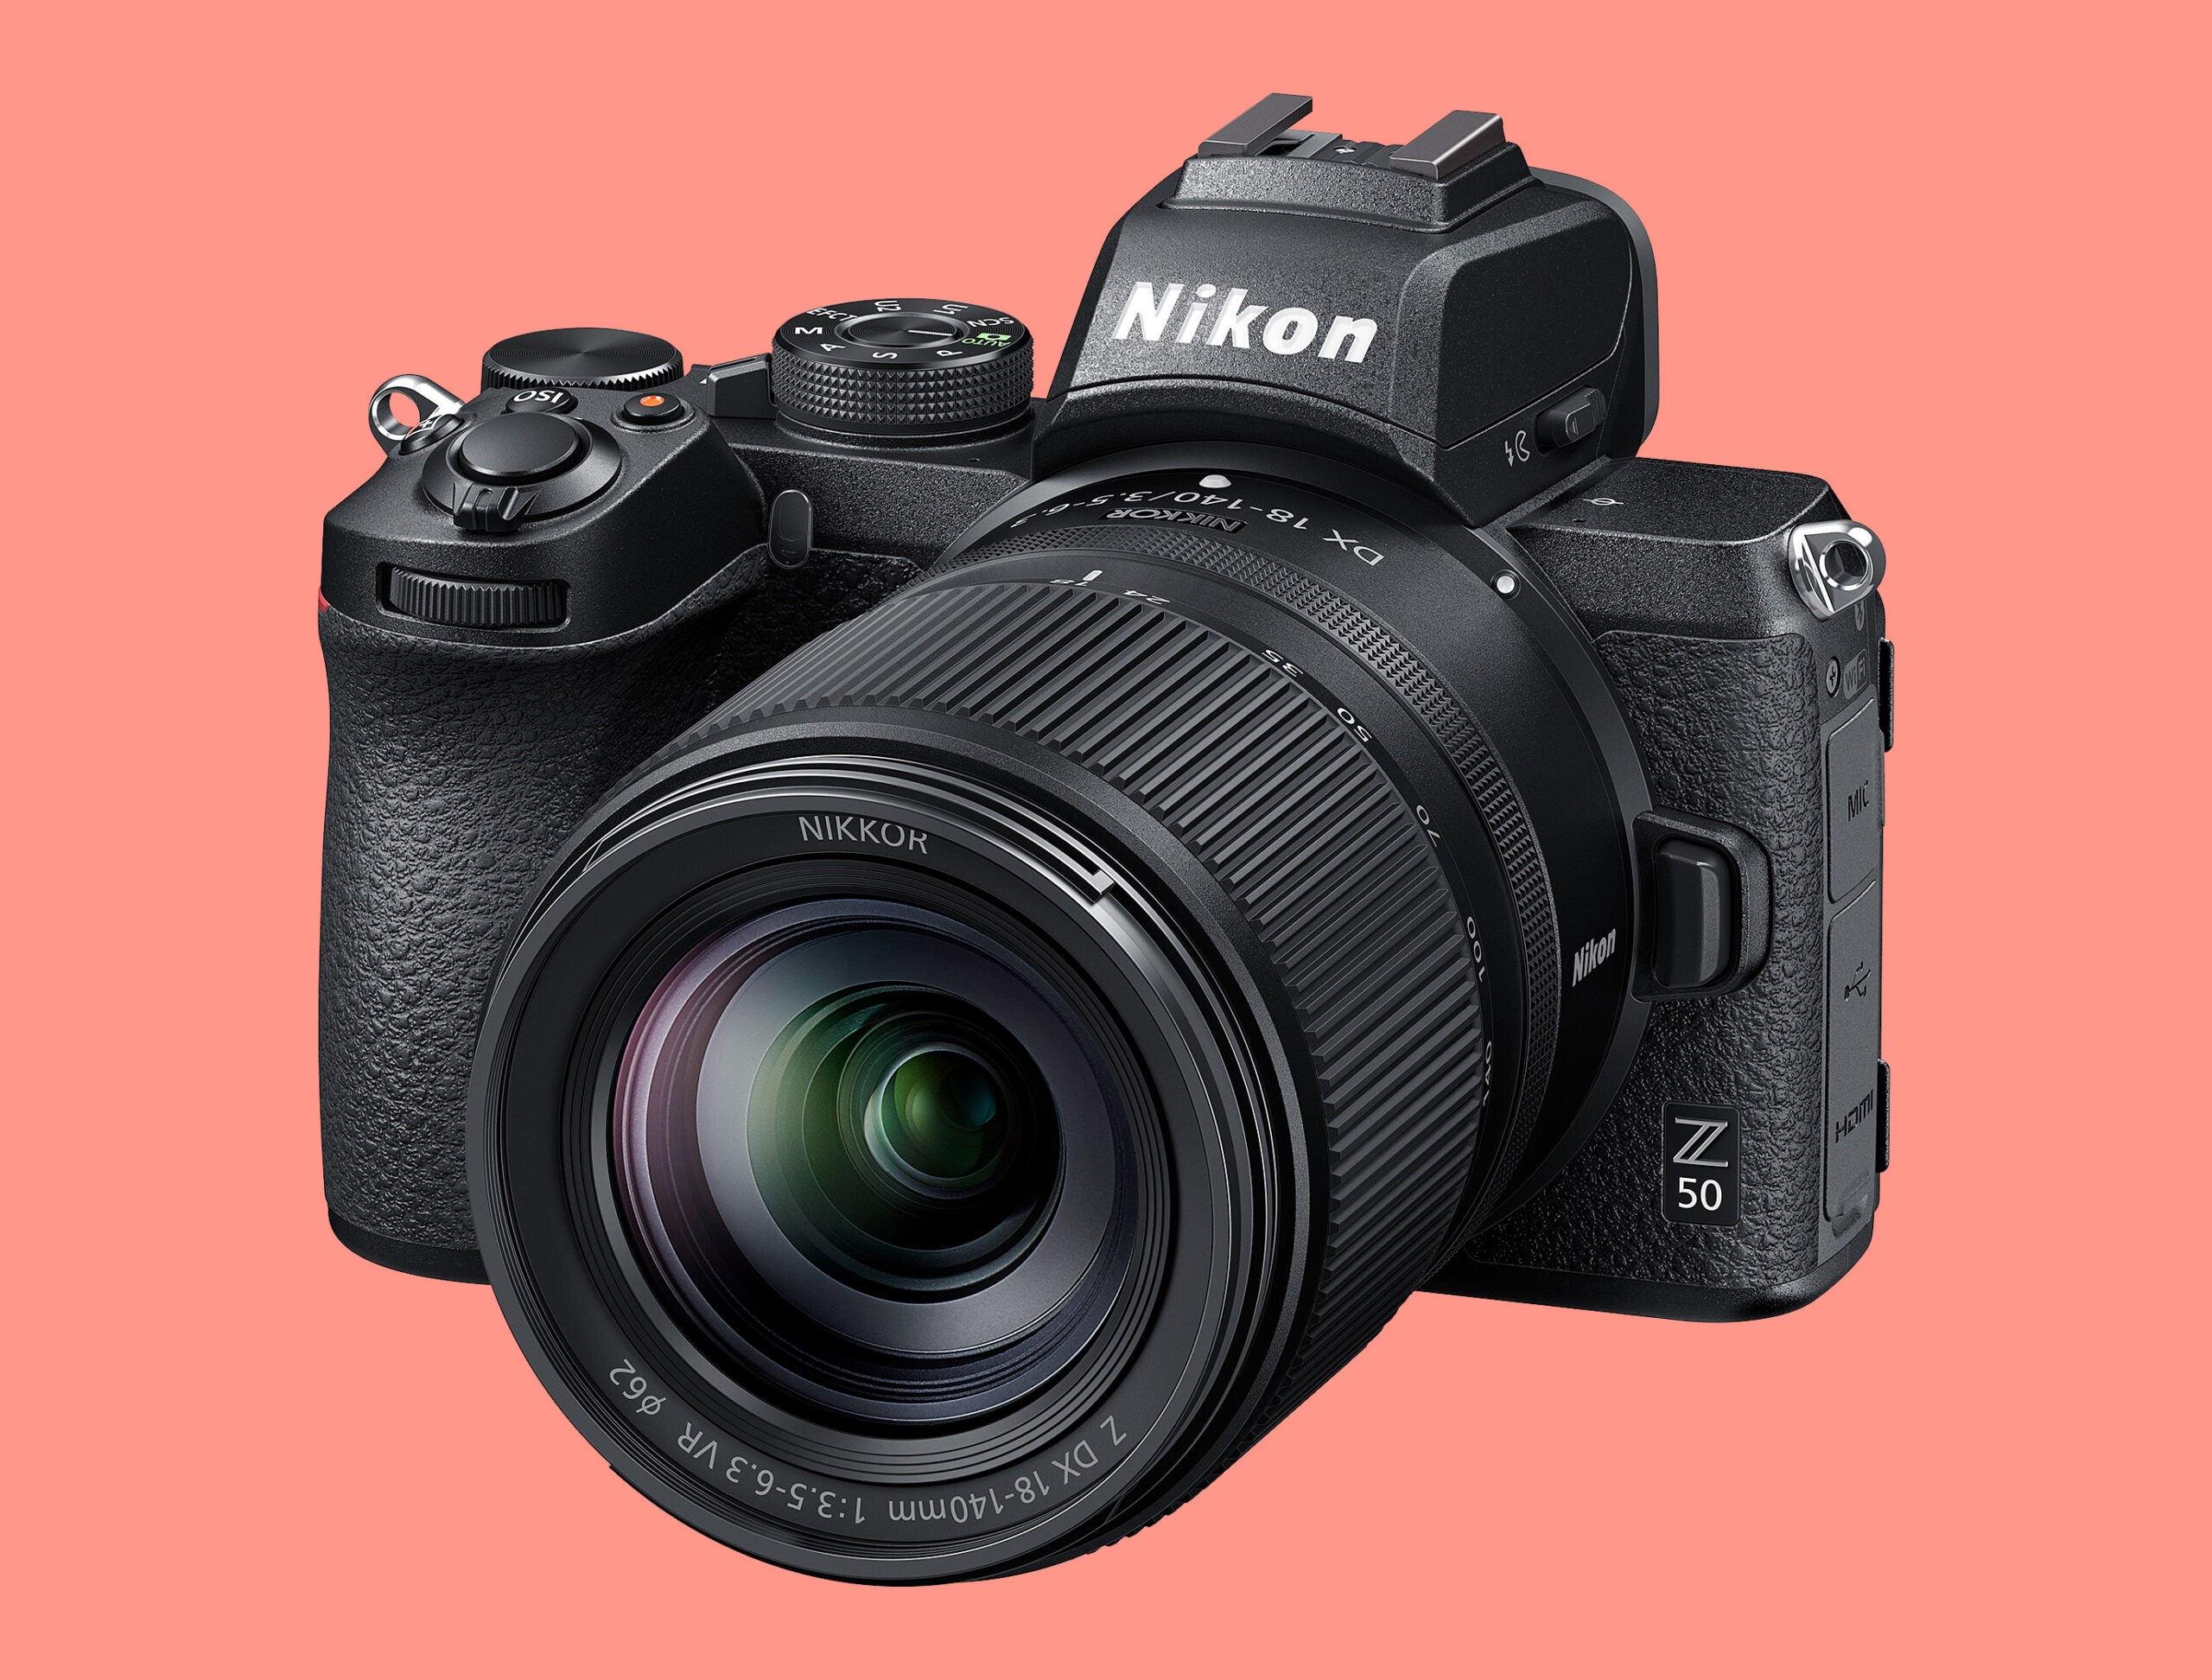 The new Nikon Z DX 18-140mm